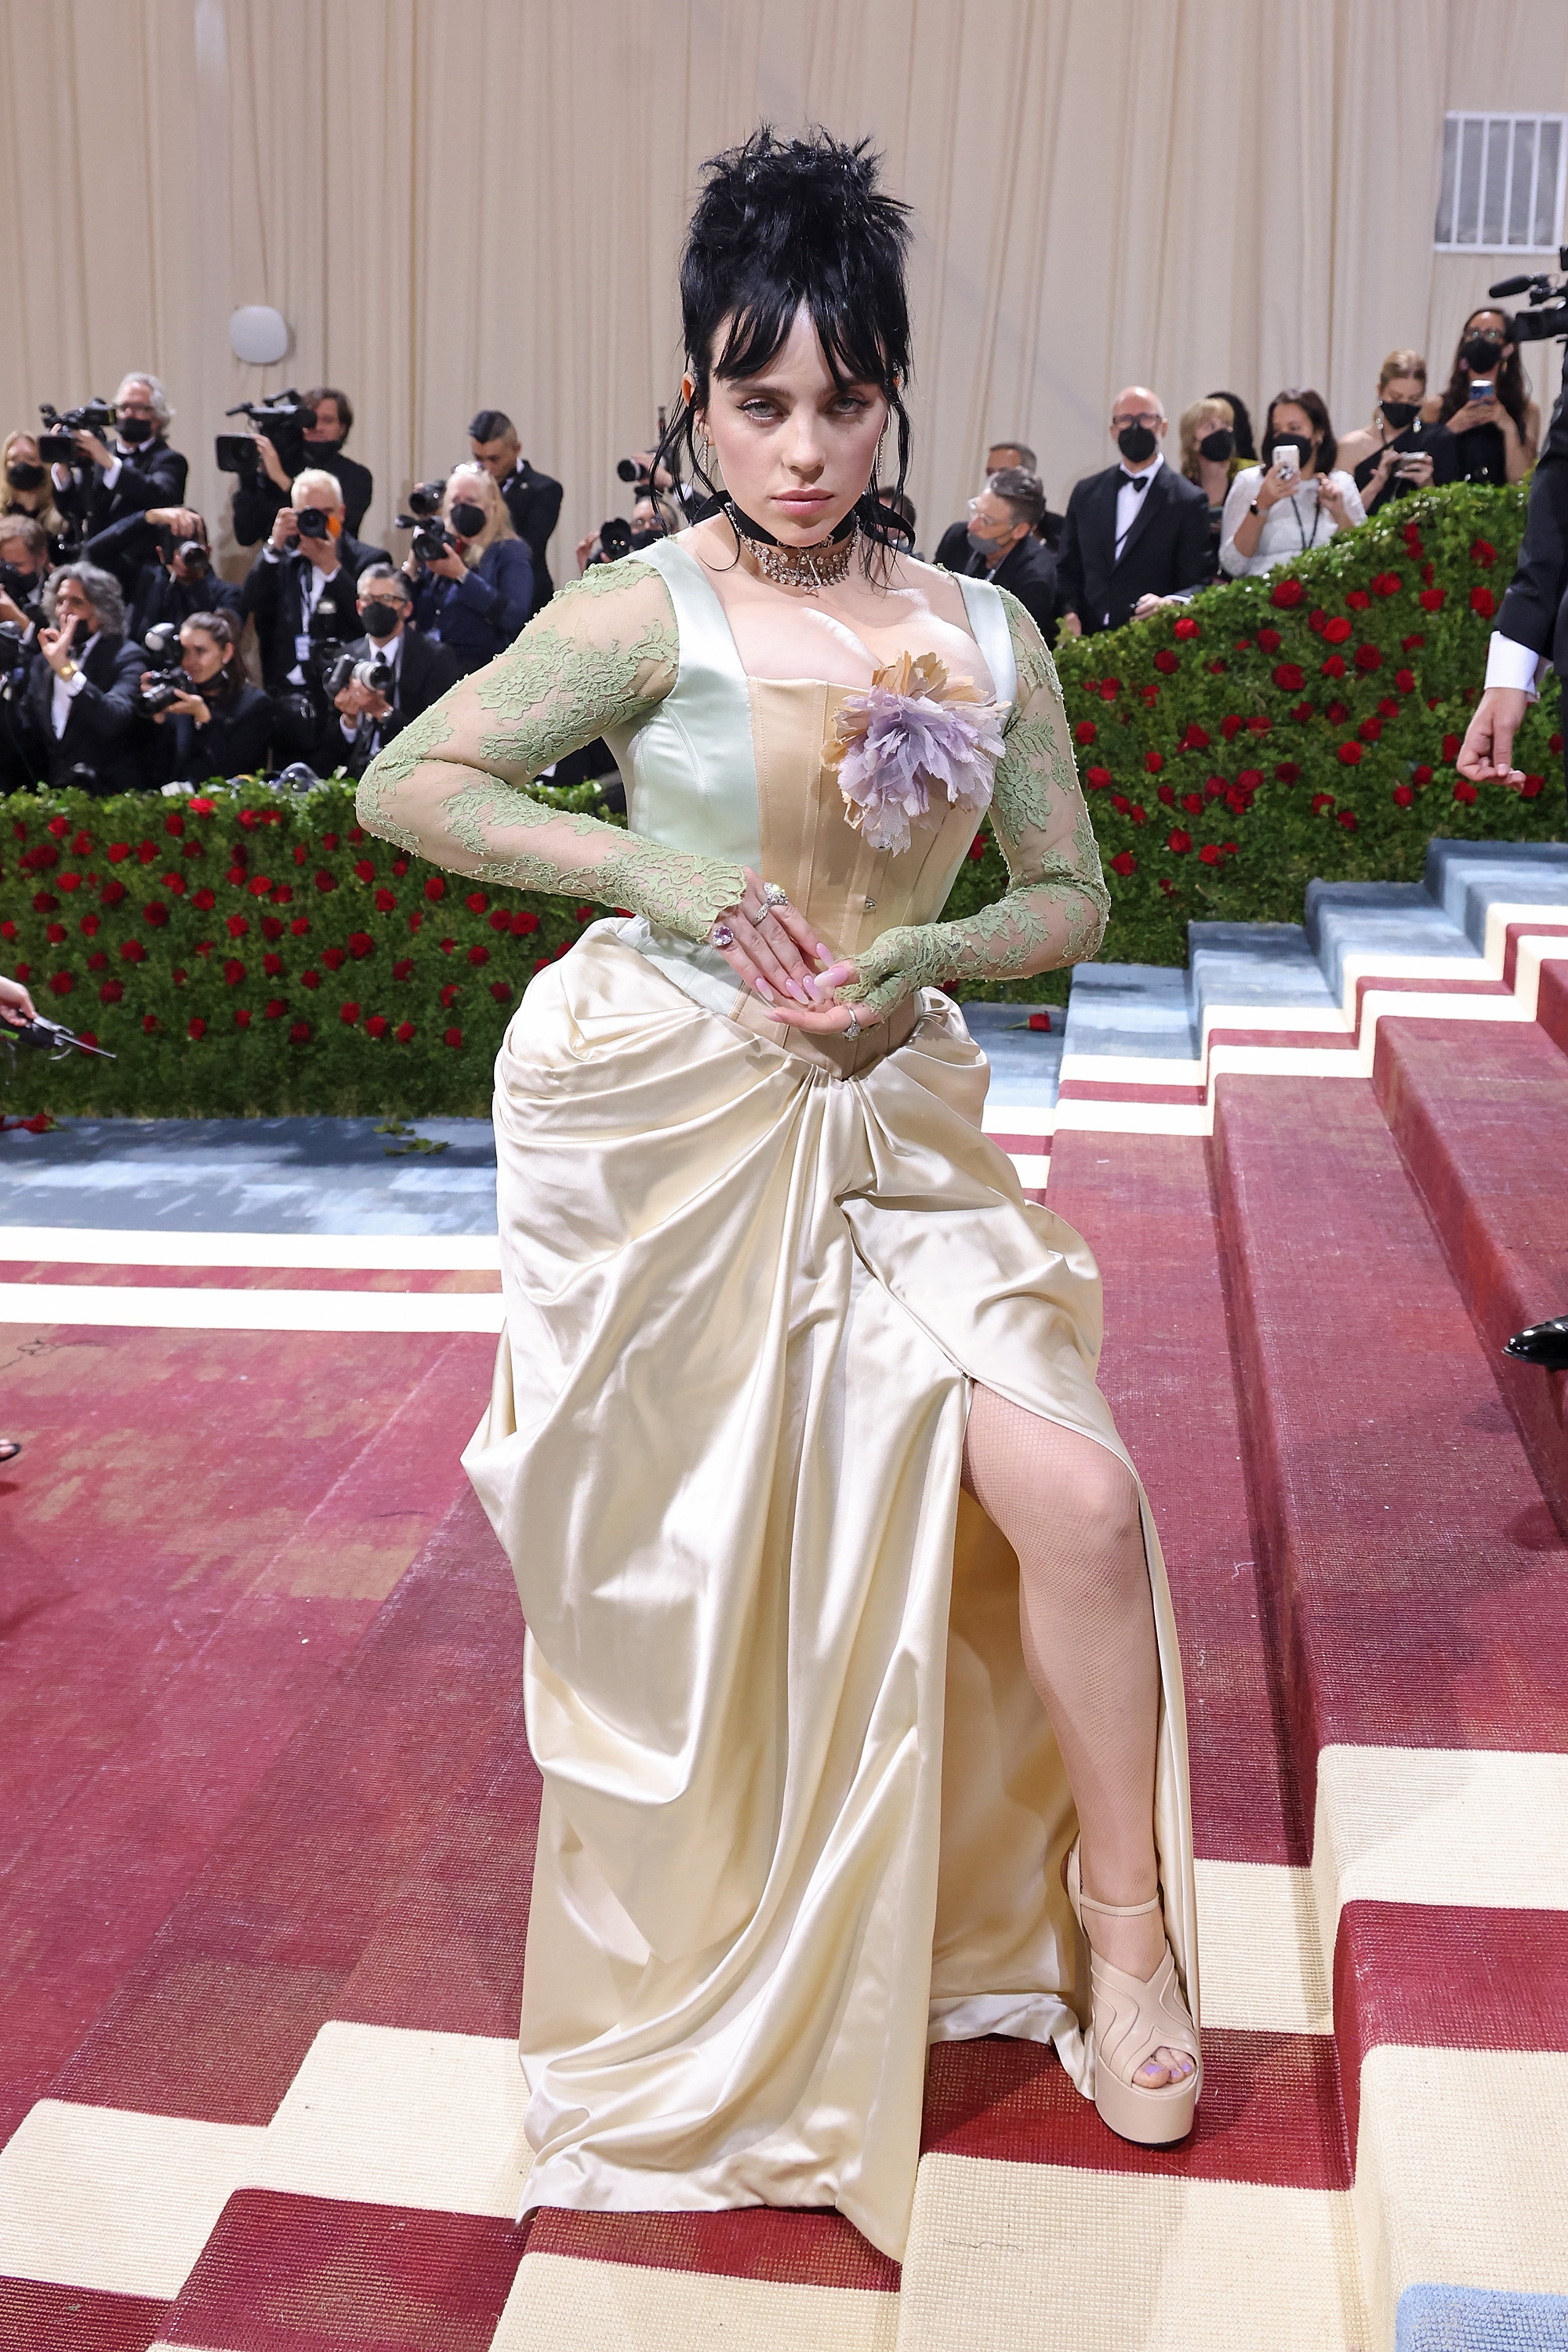 Met Gala 2022: Best dressed, Kim Kardashian's Marilyn Monroe dress